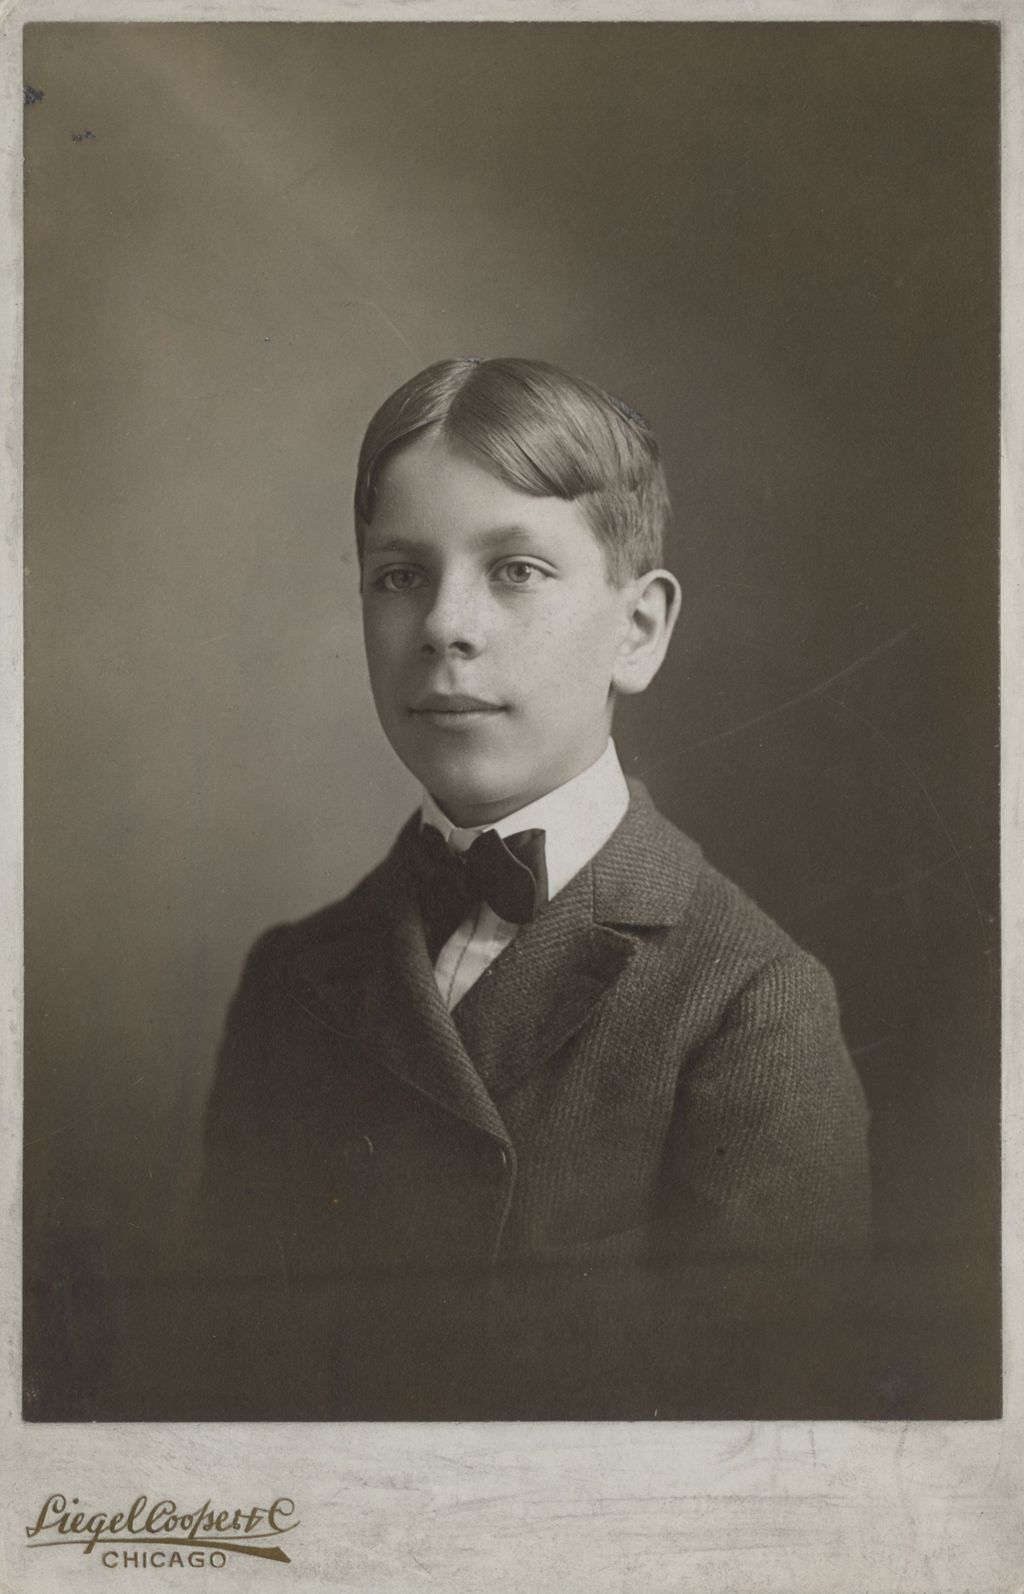 Photographic portrait of boy